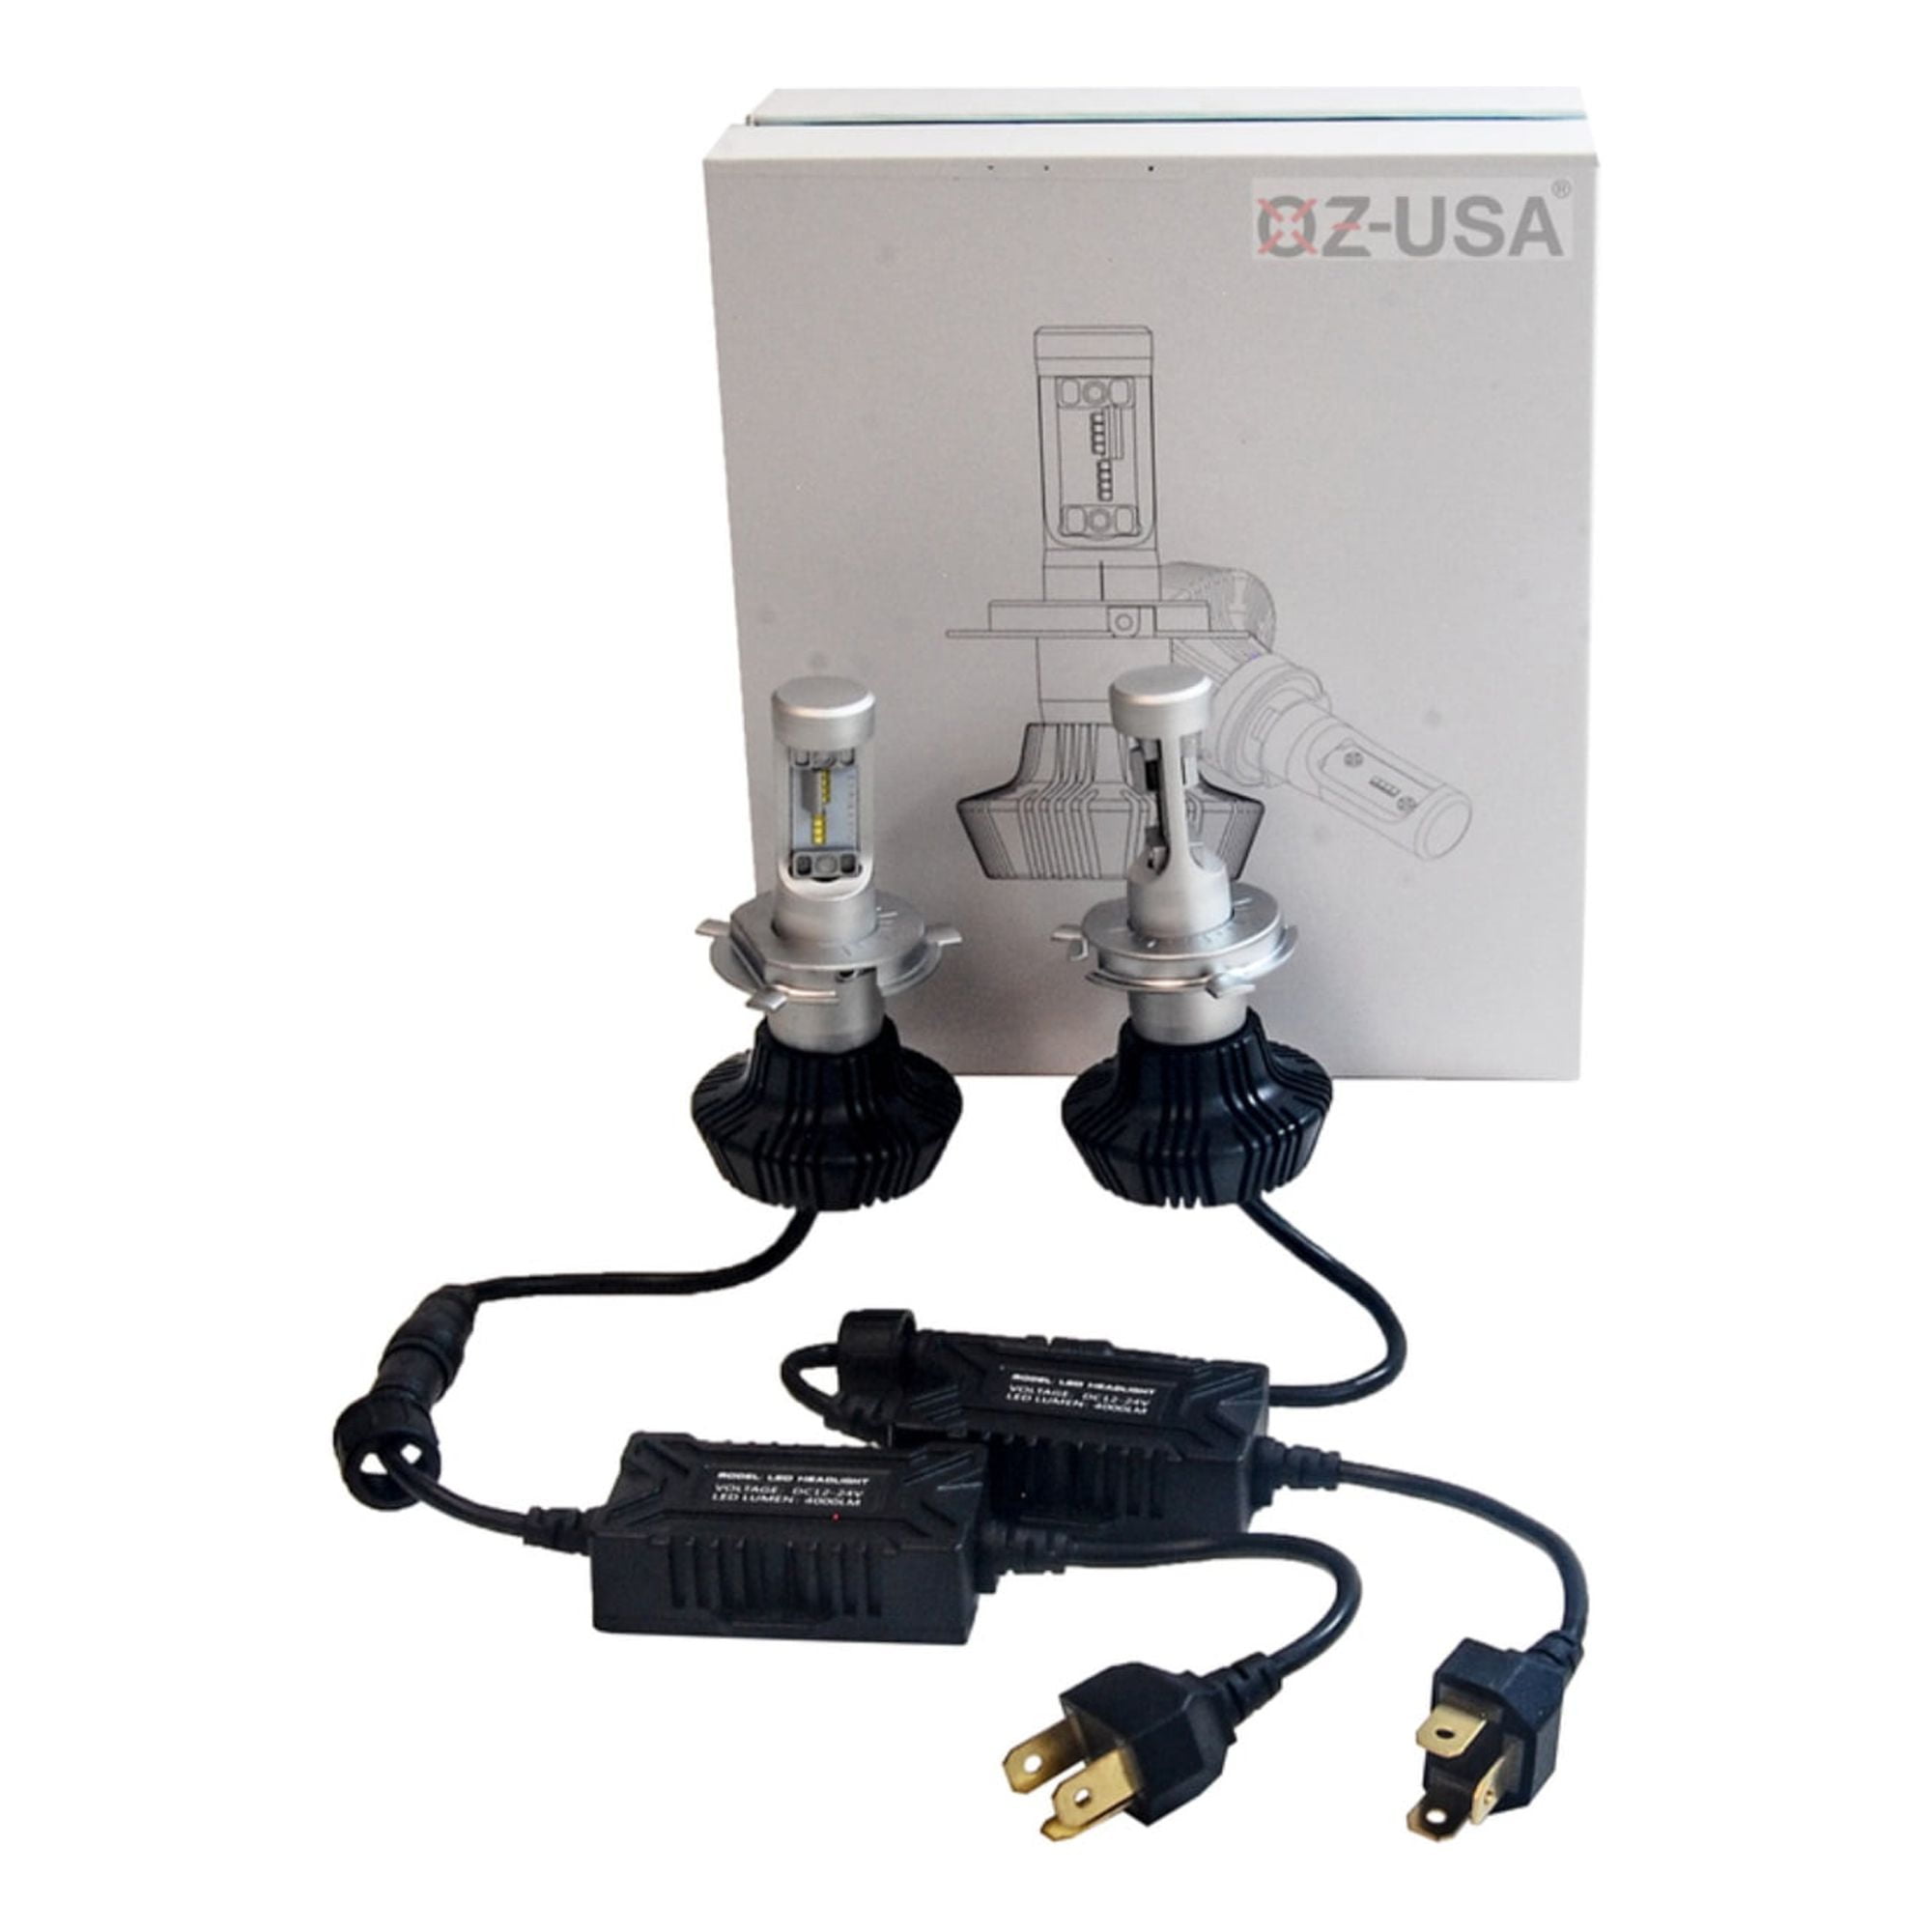 (W) 7HL-H4 LED Headlight Kit by OZ-USA Dual Beam 4000LM Xenon White 6500K